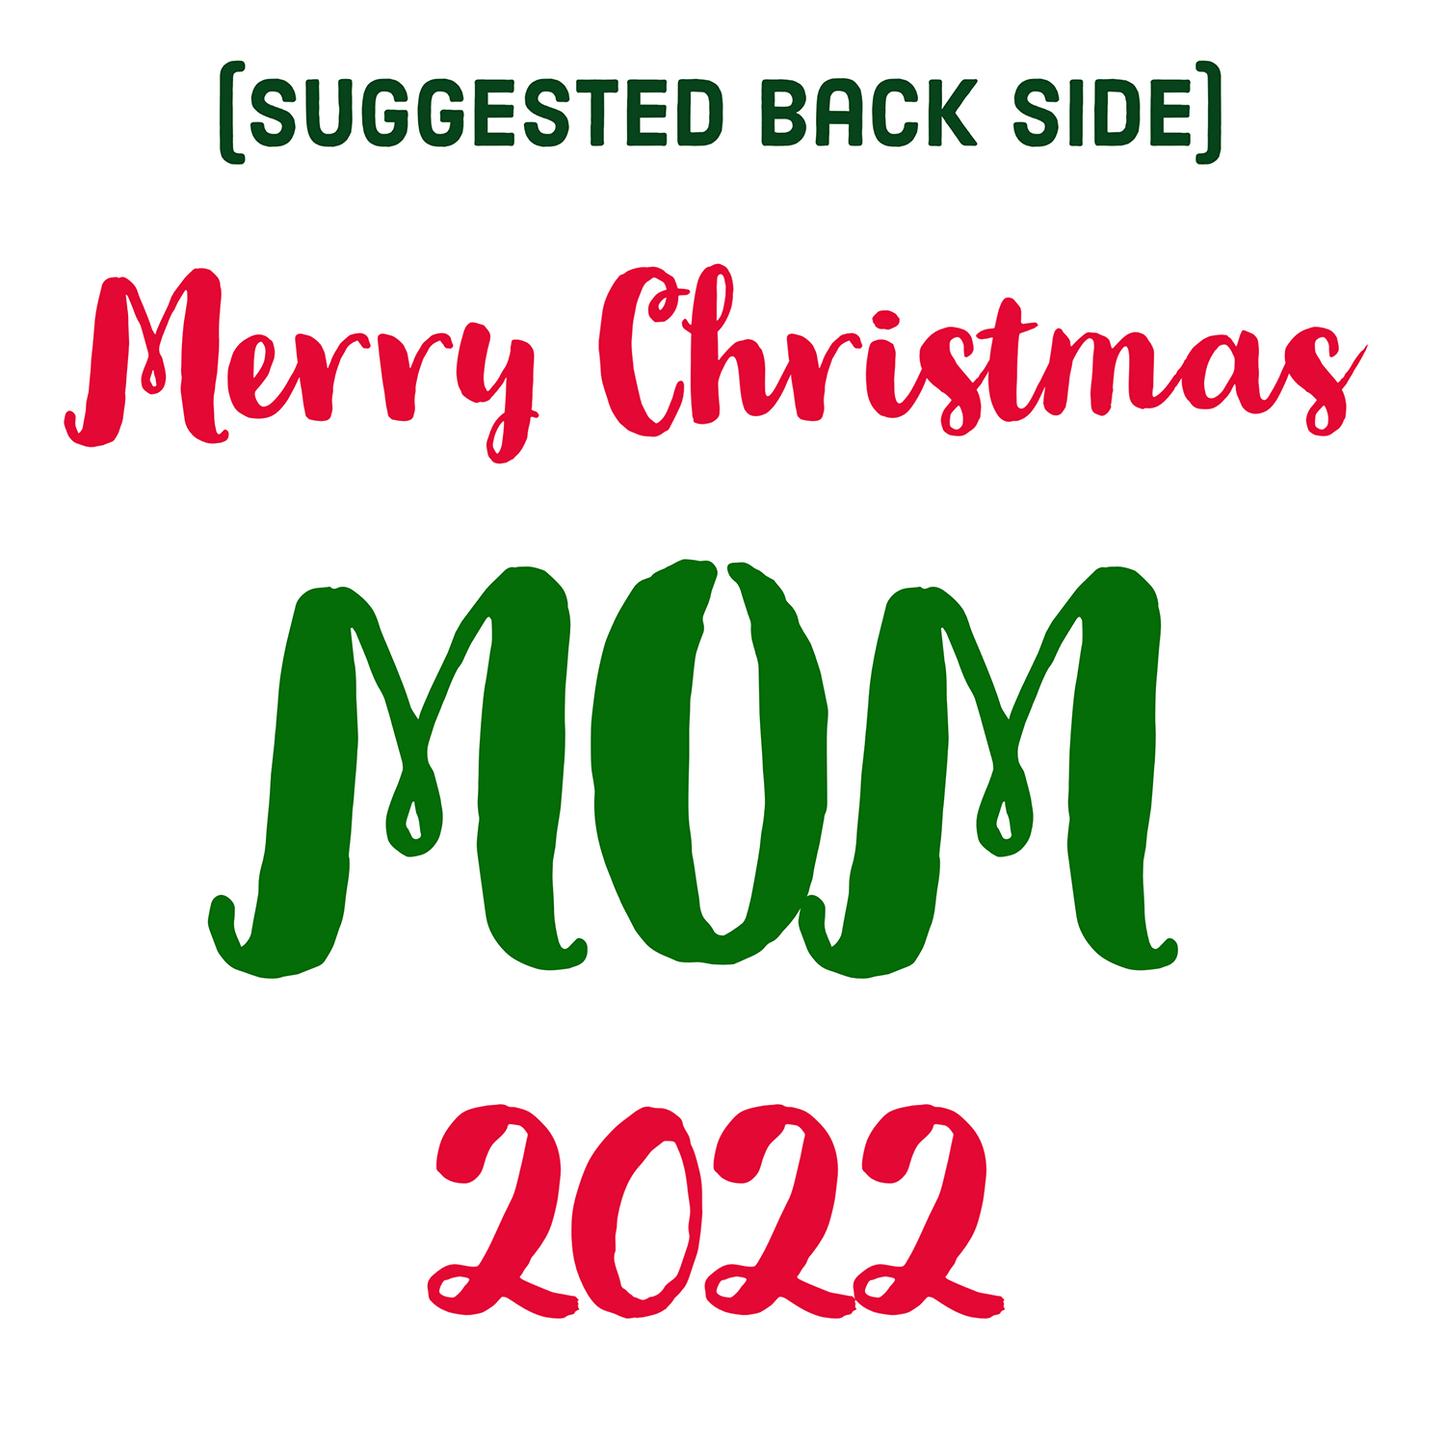 Personalized Christmas Coffee Mug: "Dear Santa Define Good" (2) - FREE SHIPPING - 2 SIDED